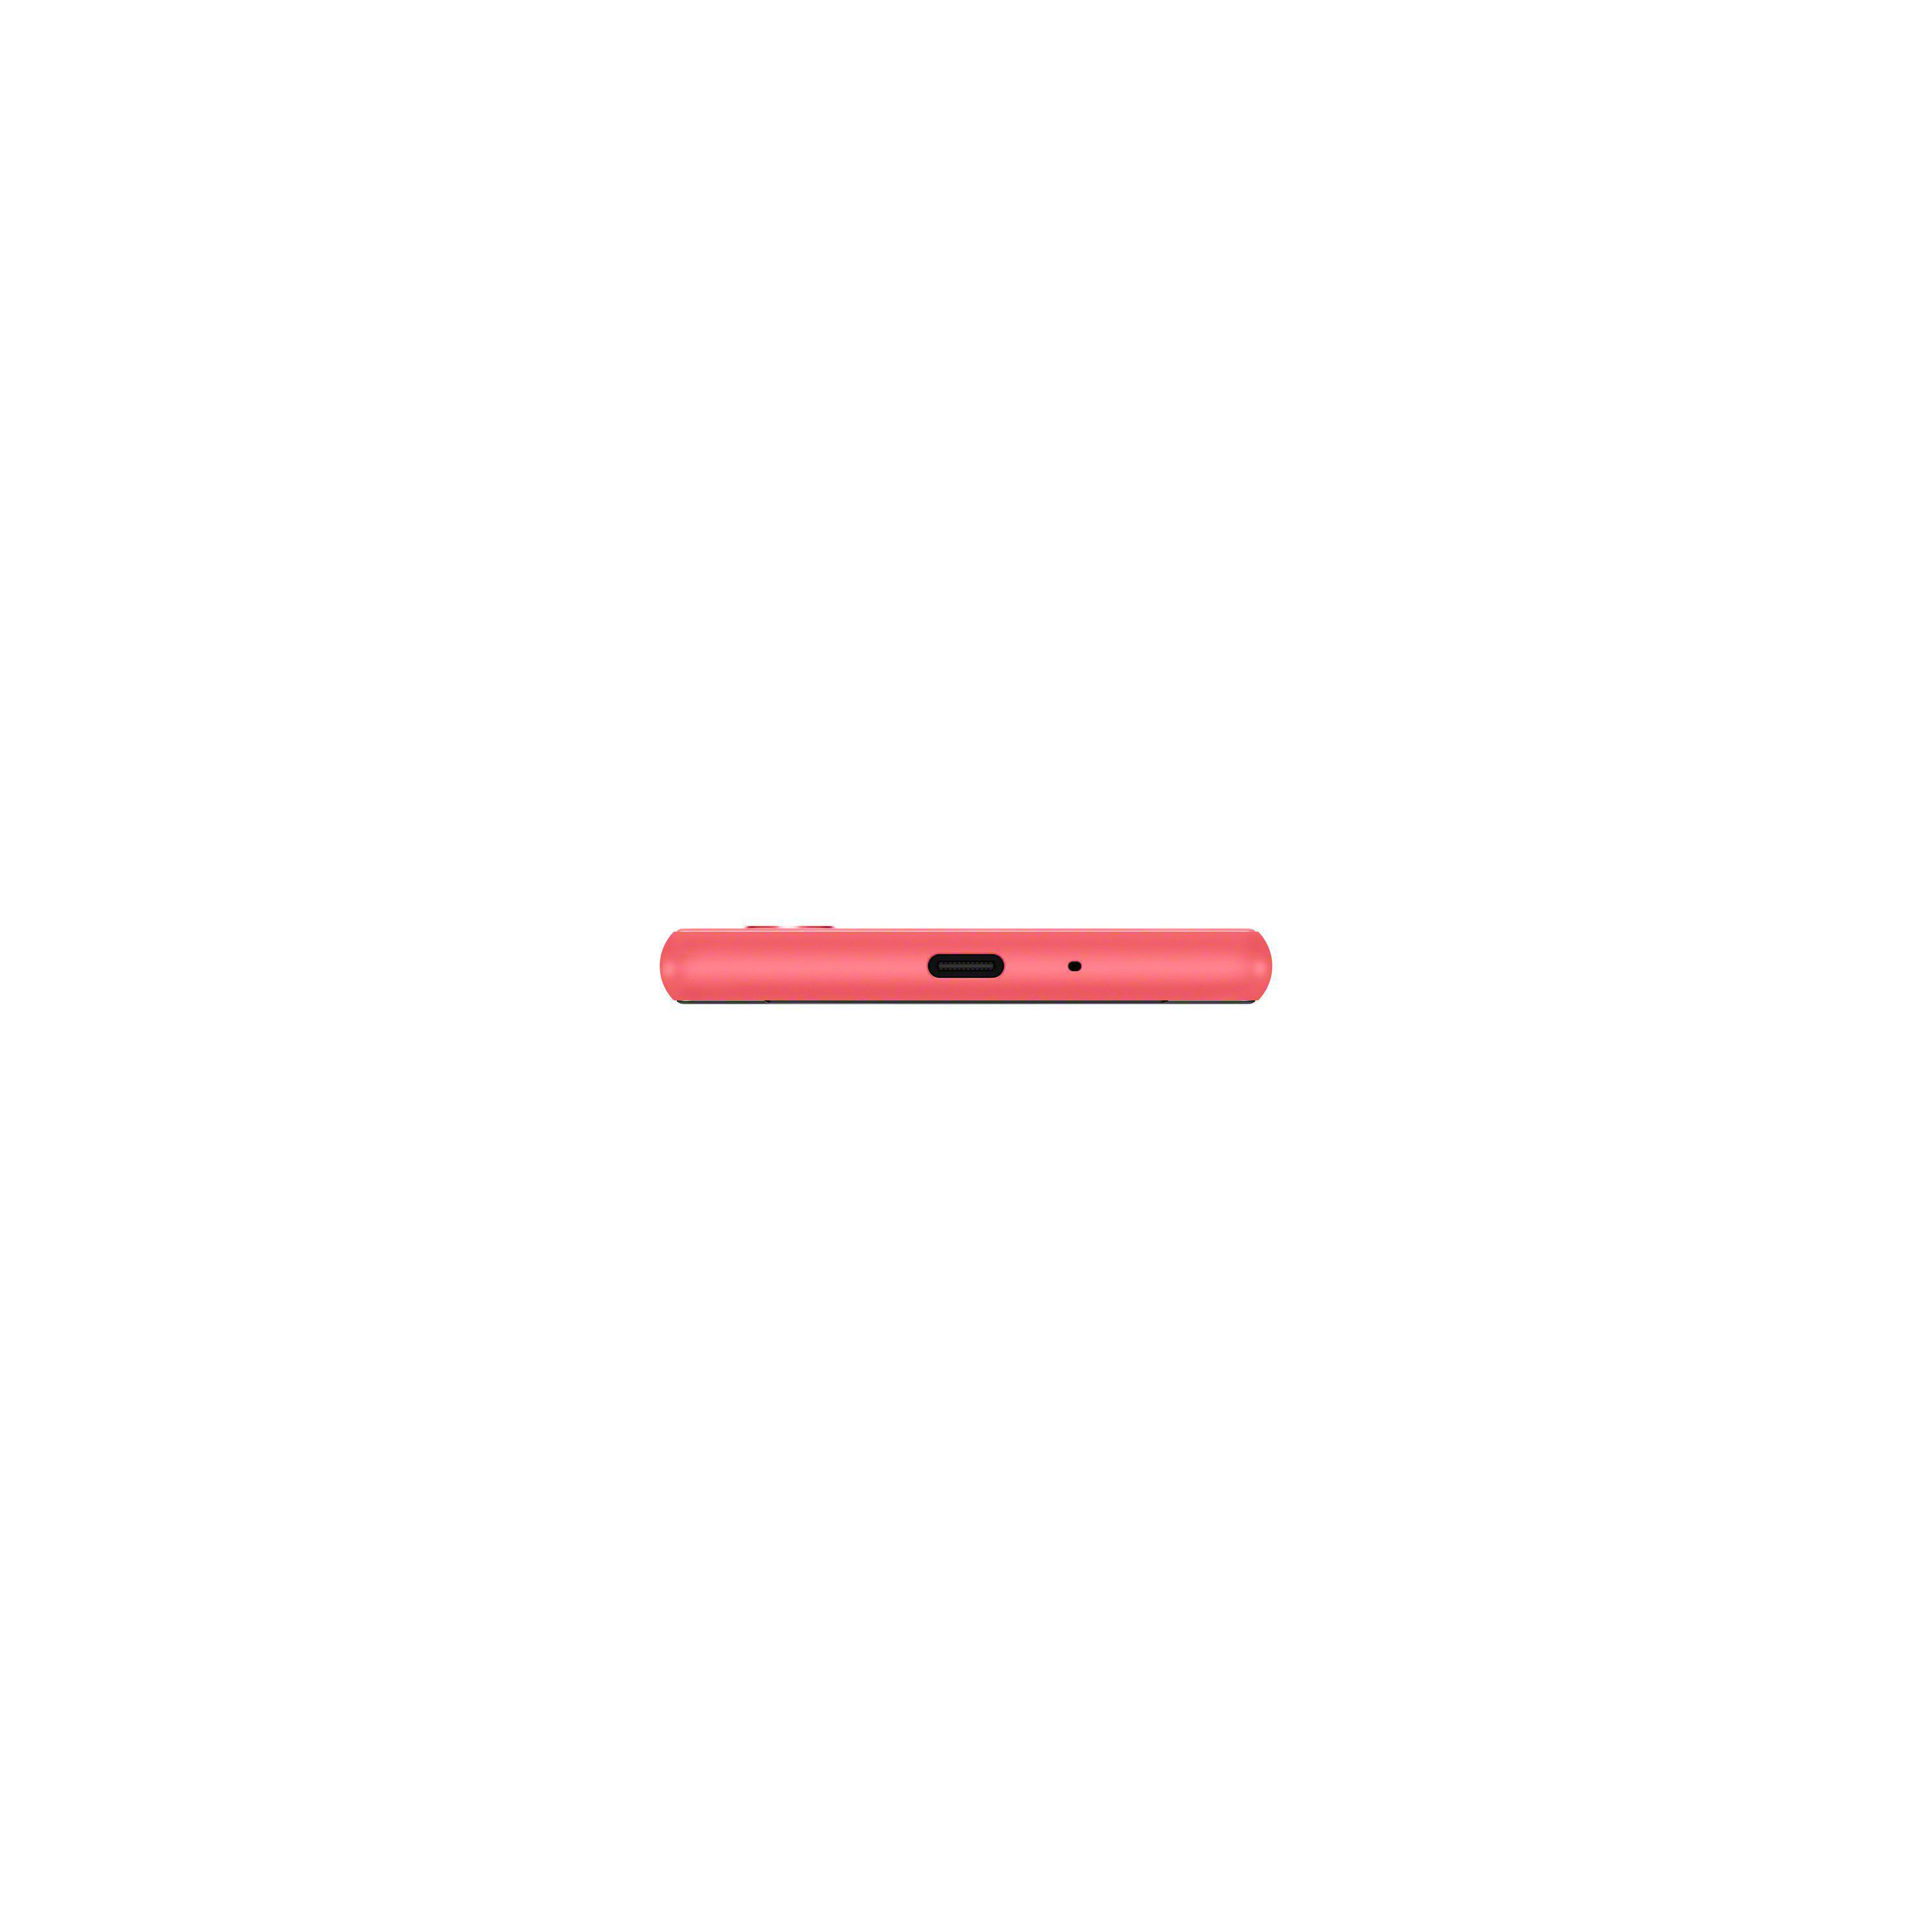 SONY Xperia 21:9 10 Pink GB Display 128 III 5G SIM Dual